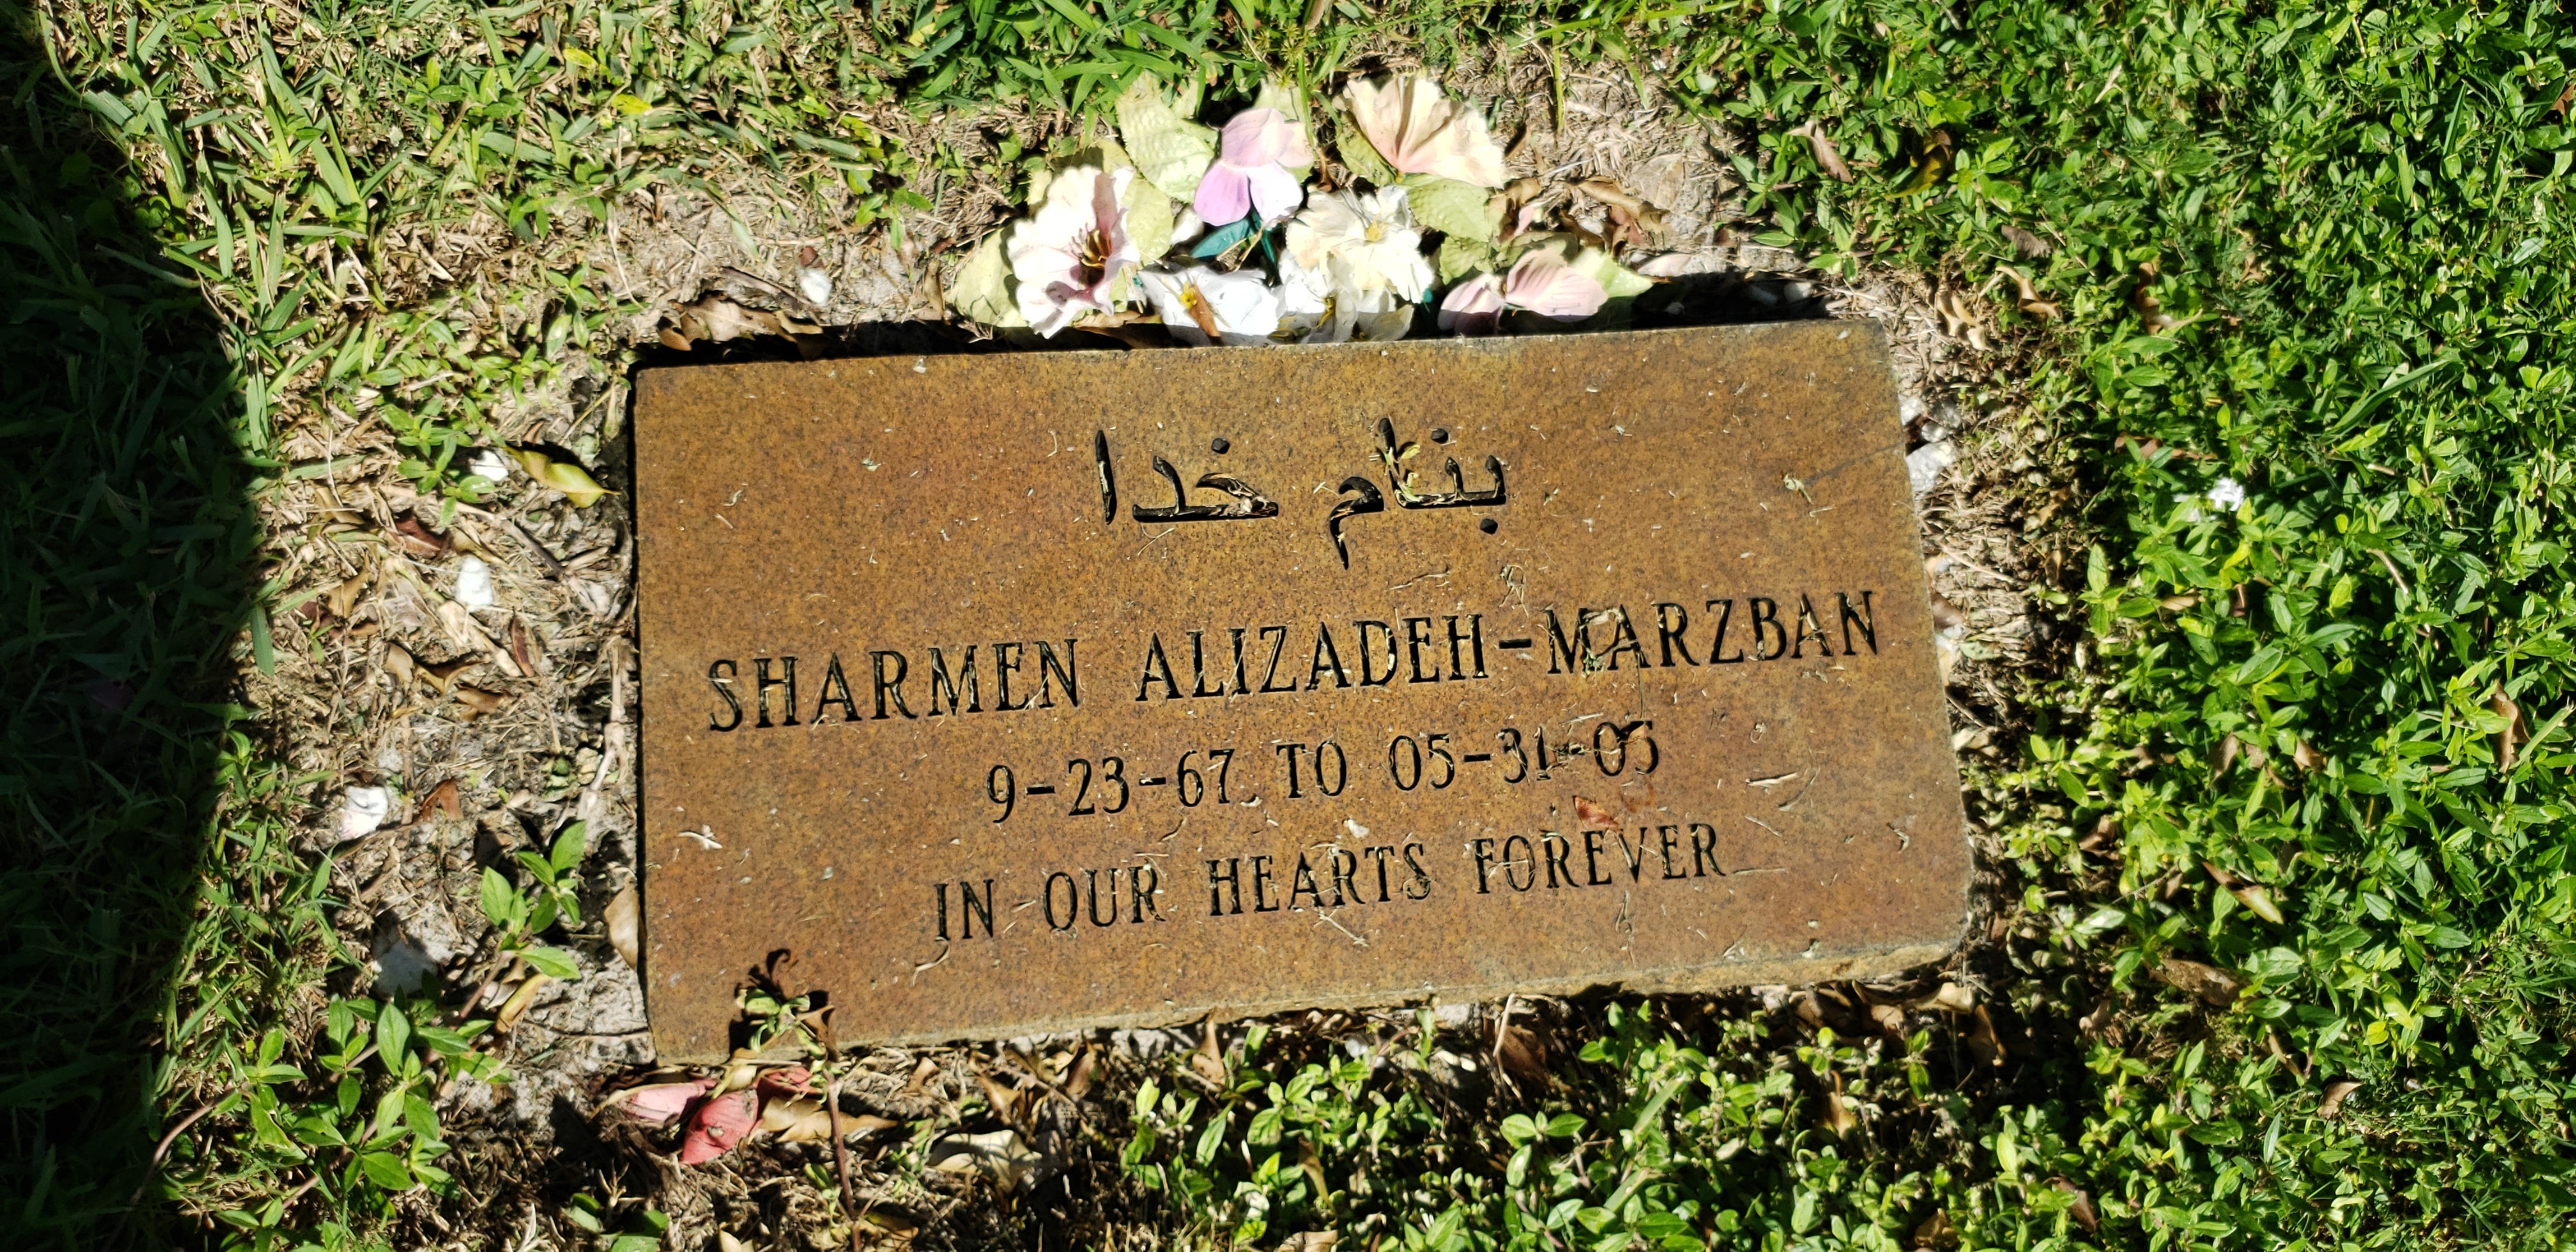 Sharmen Alizadeh-Marzban